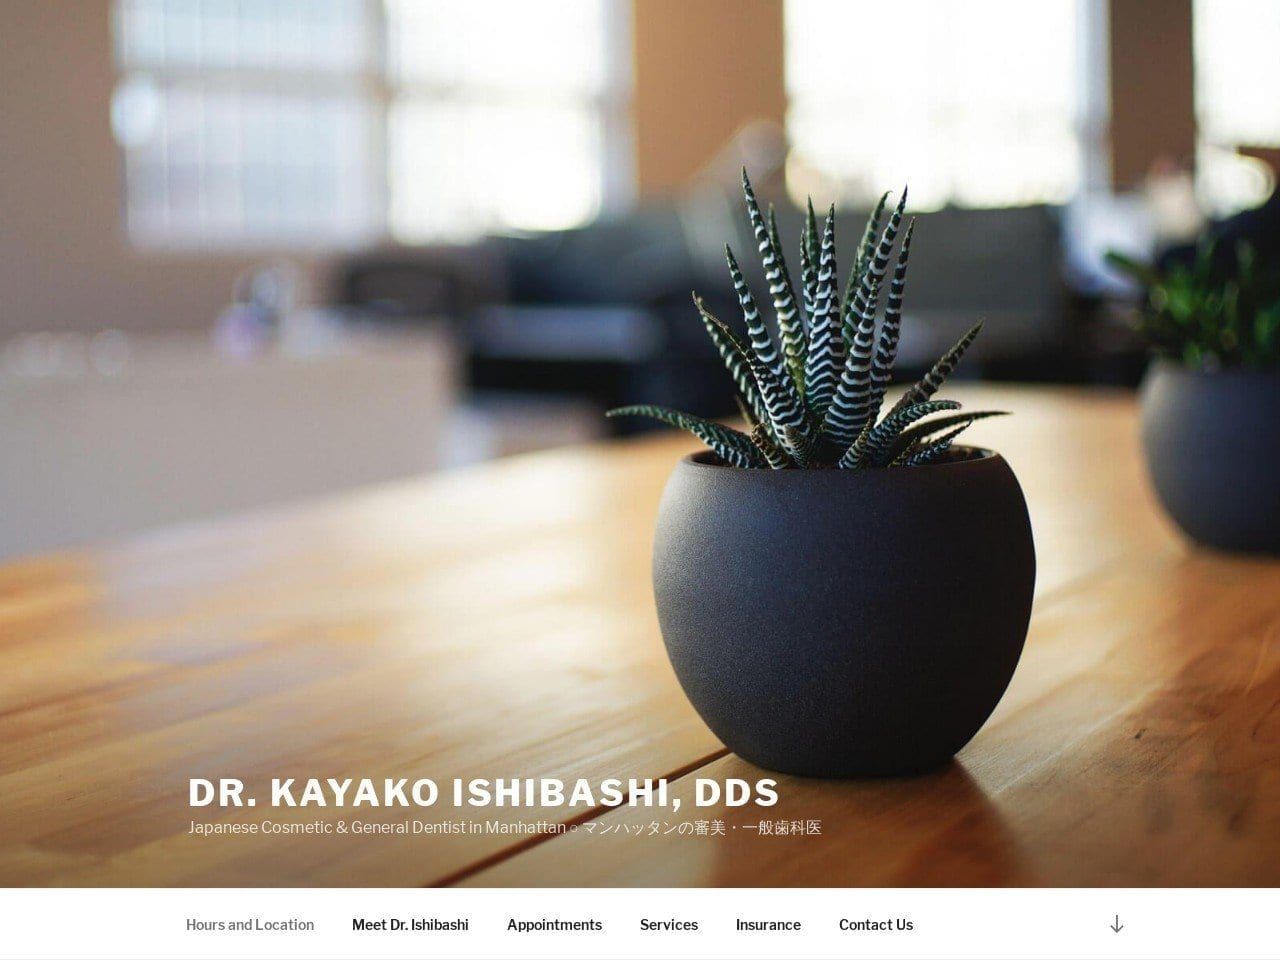 Dr. Kayako Ishibashi DDS Website Screenshot from drishibashi.com